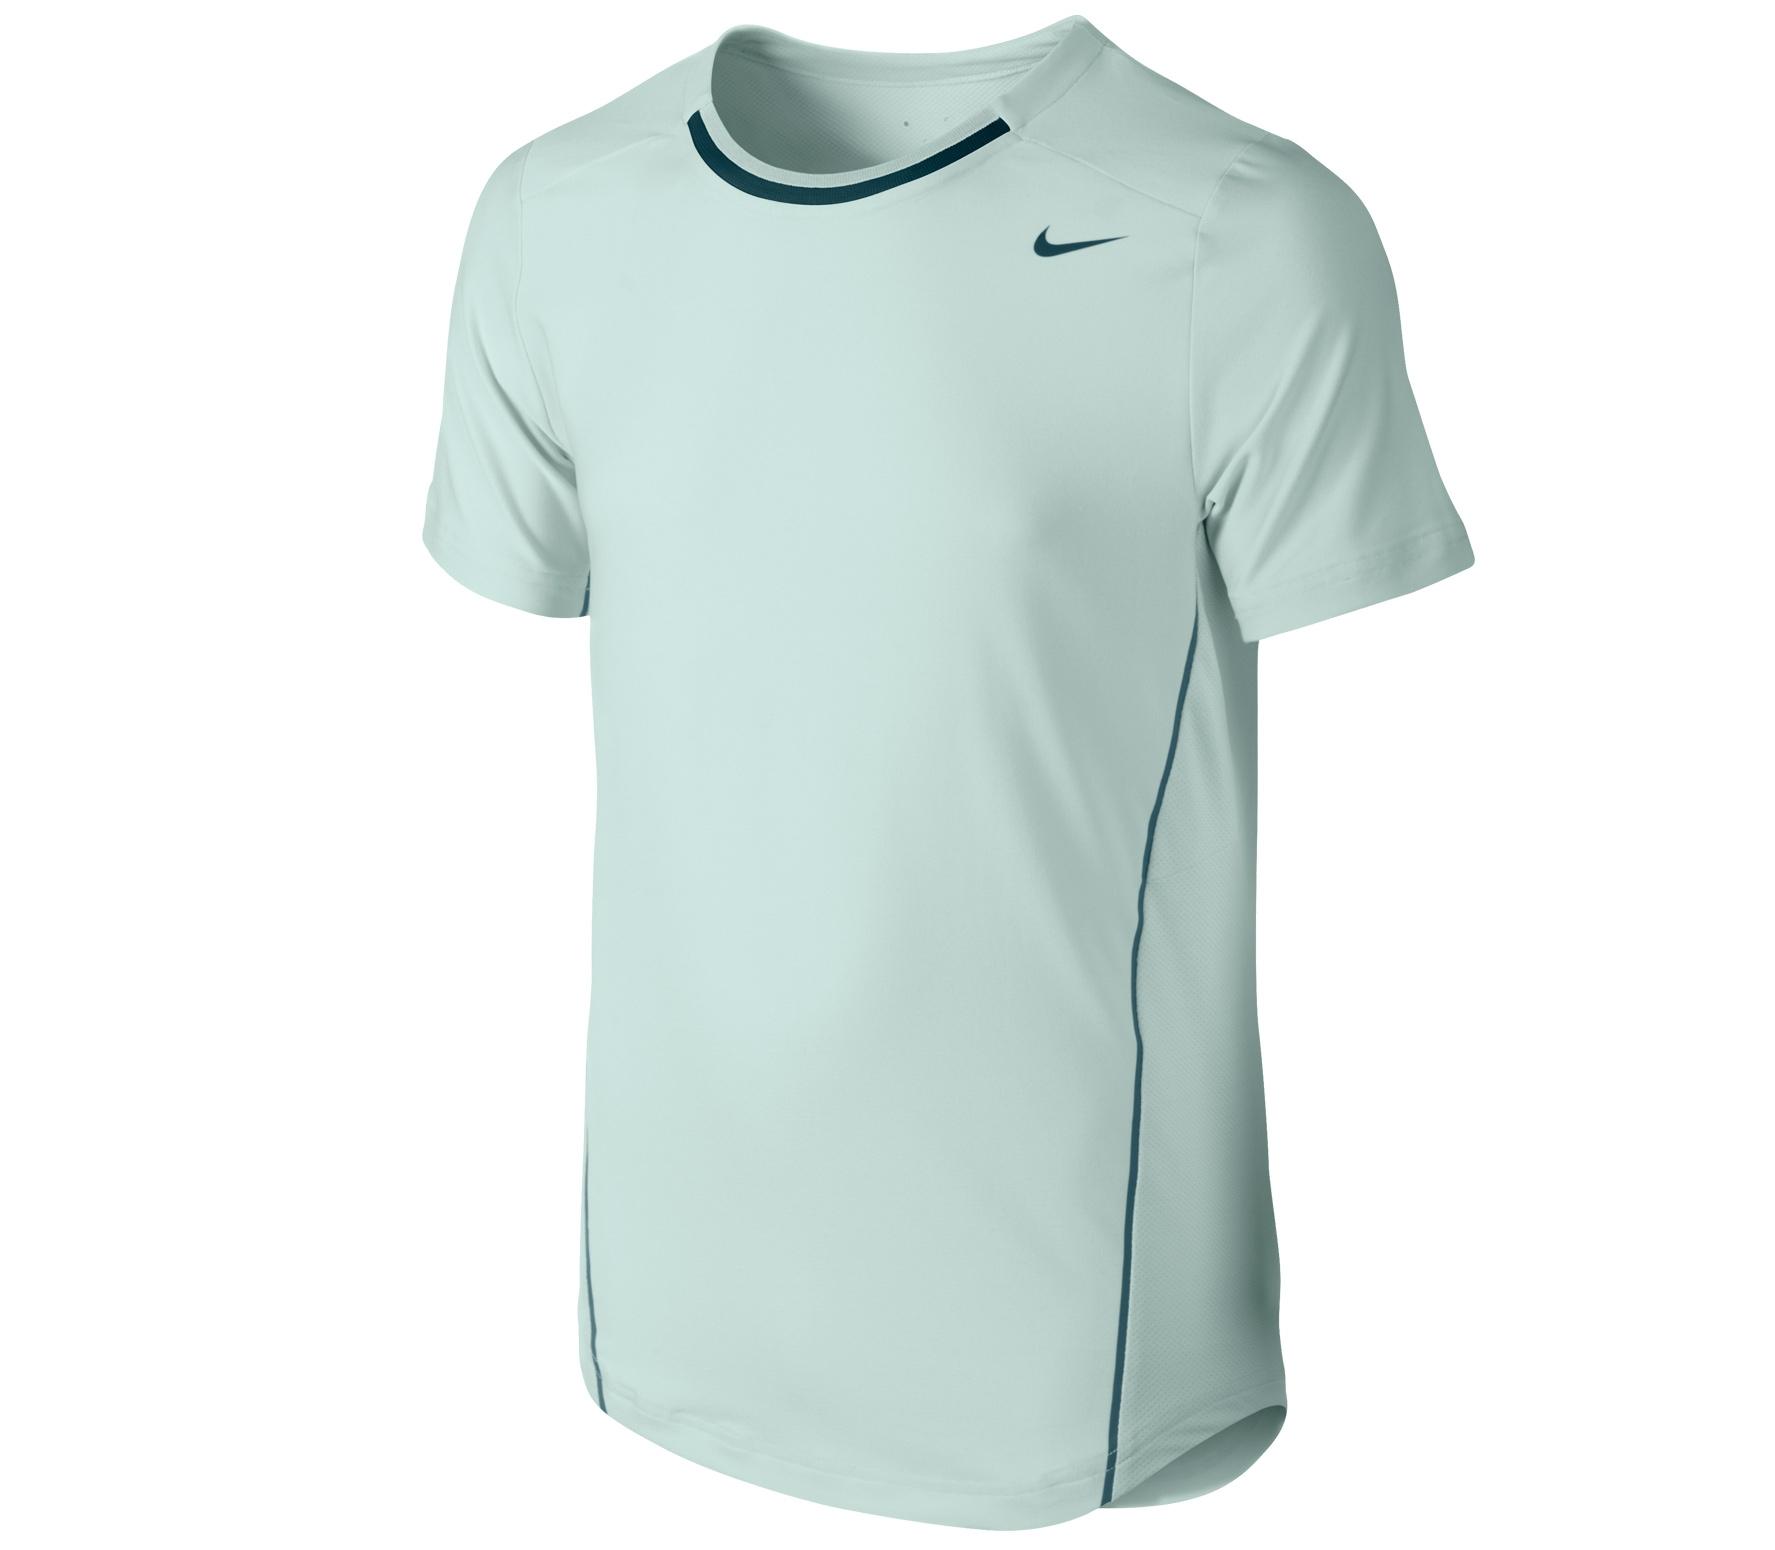 Foto Nike - Camiseta Tenis Niños Premier Rafa Nadal Bull Crew Tee - SU13